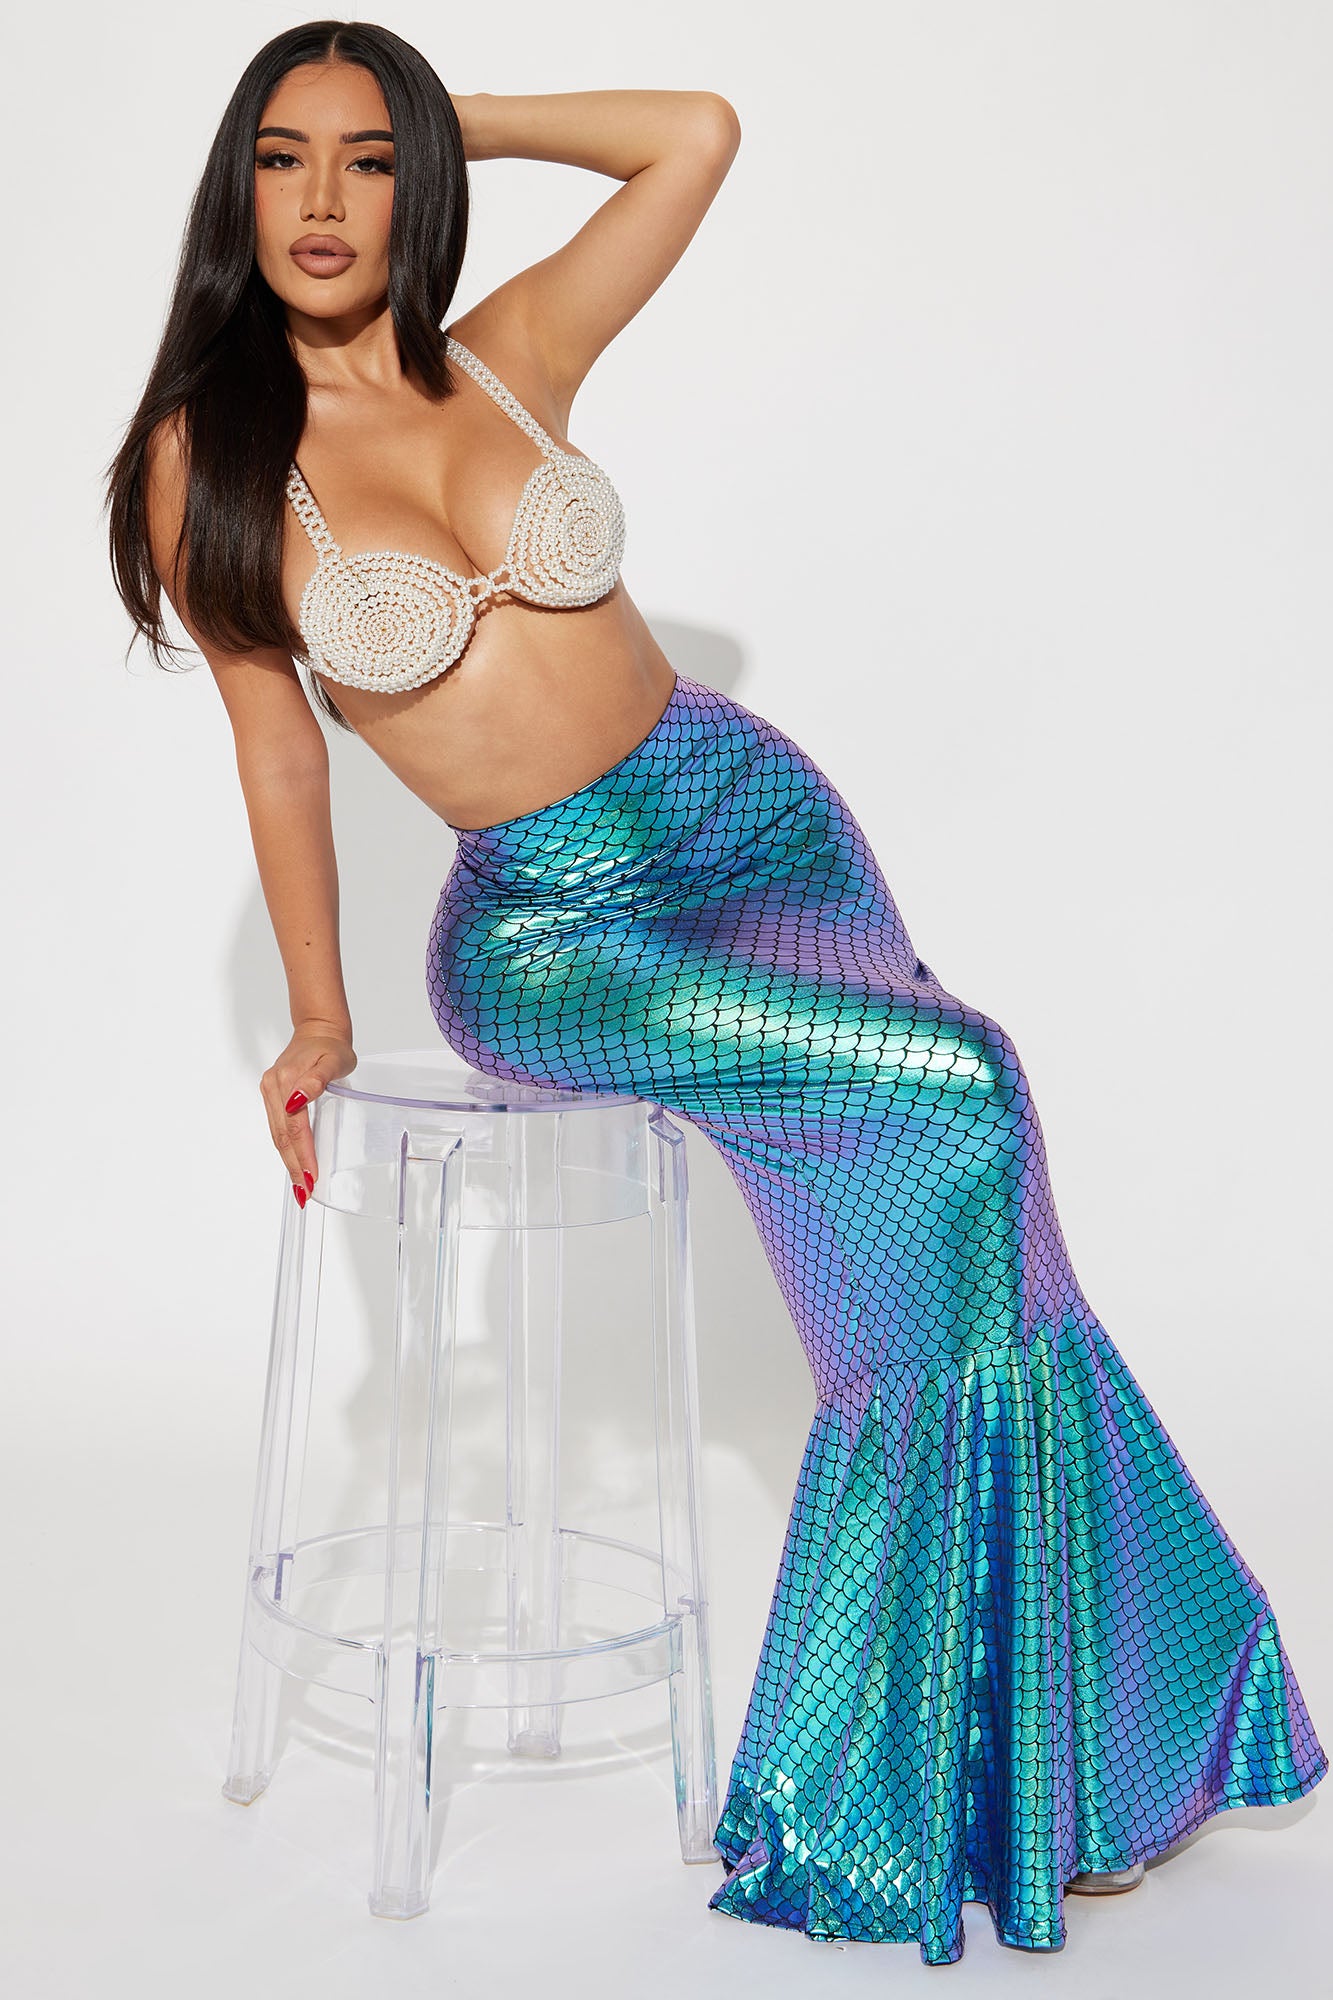 Under The Sea Mermaid Skirt Costume Starter - Turquoise